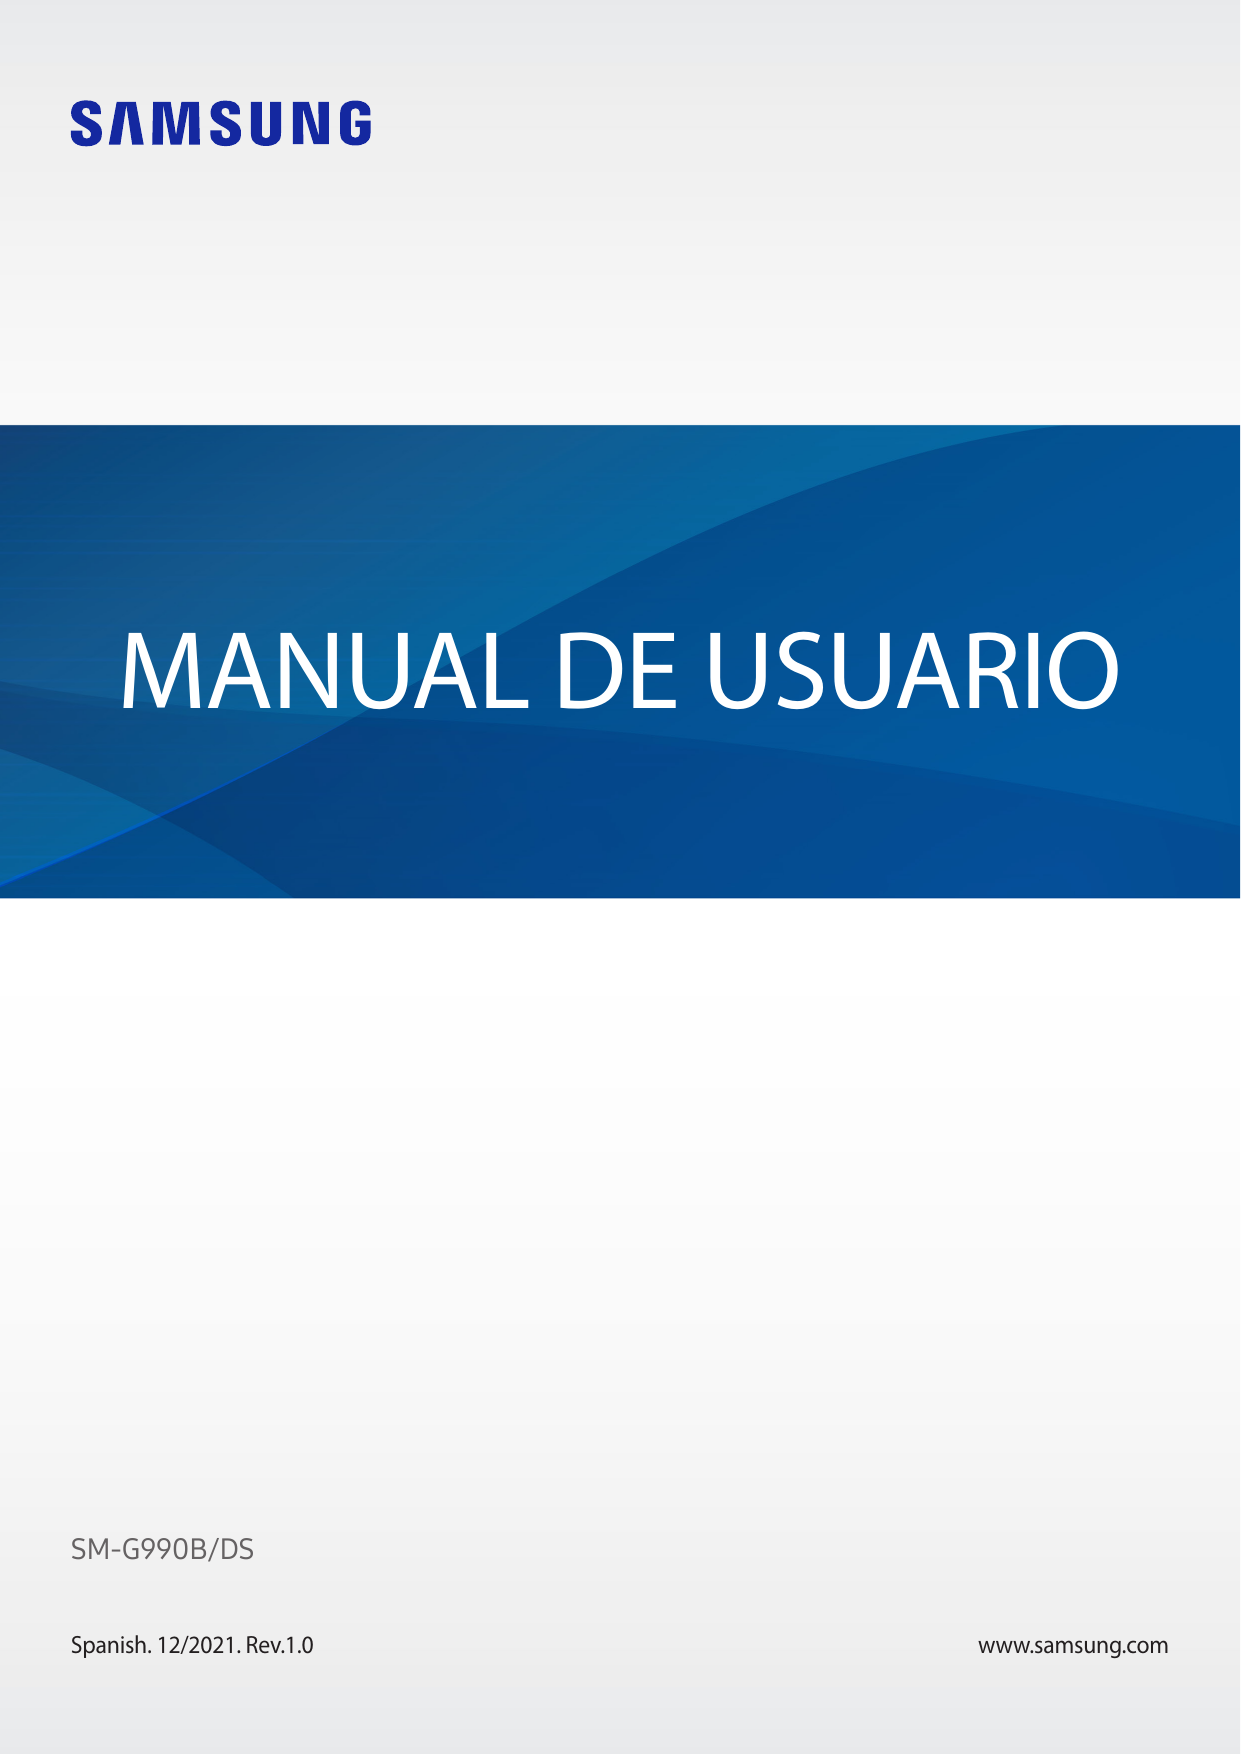 MANUAL DE USUARIOSM-G990B/DSSpanish. 12/2021. Rev.1.0www.samsung.com